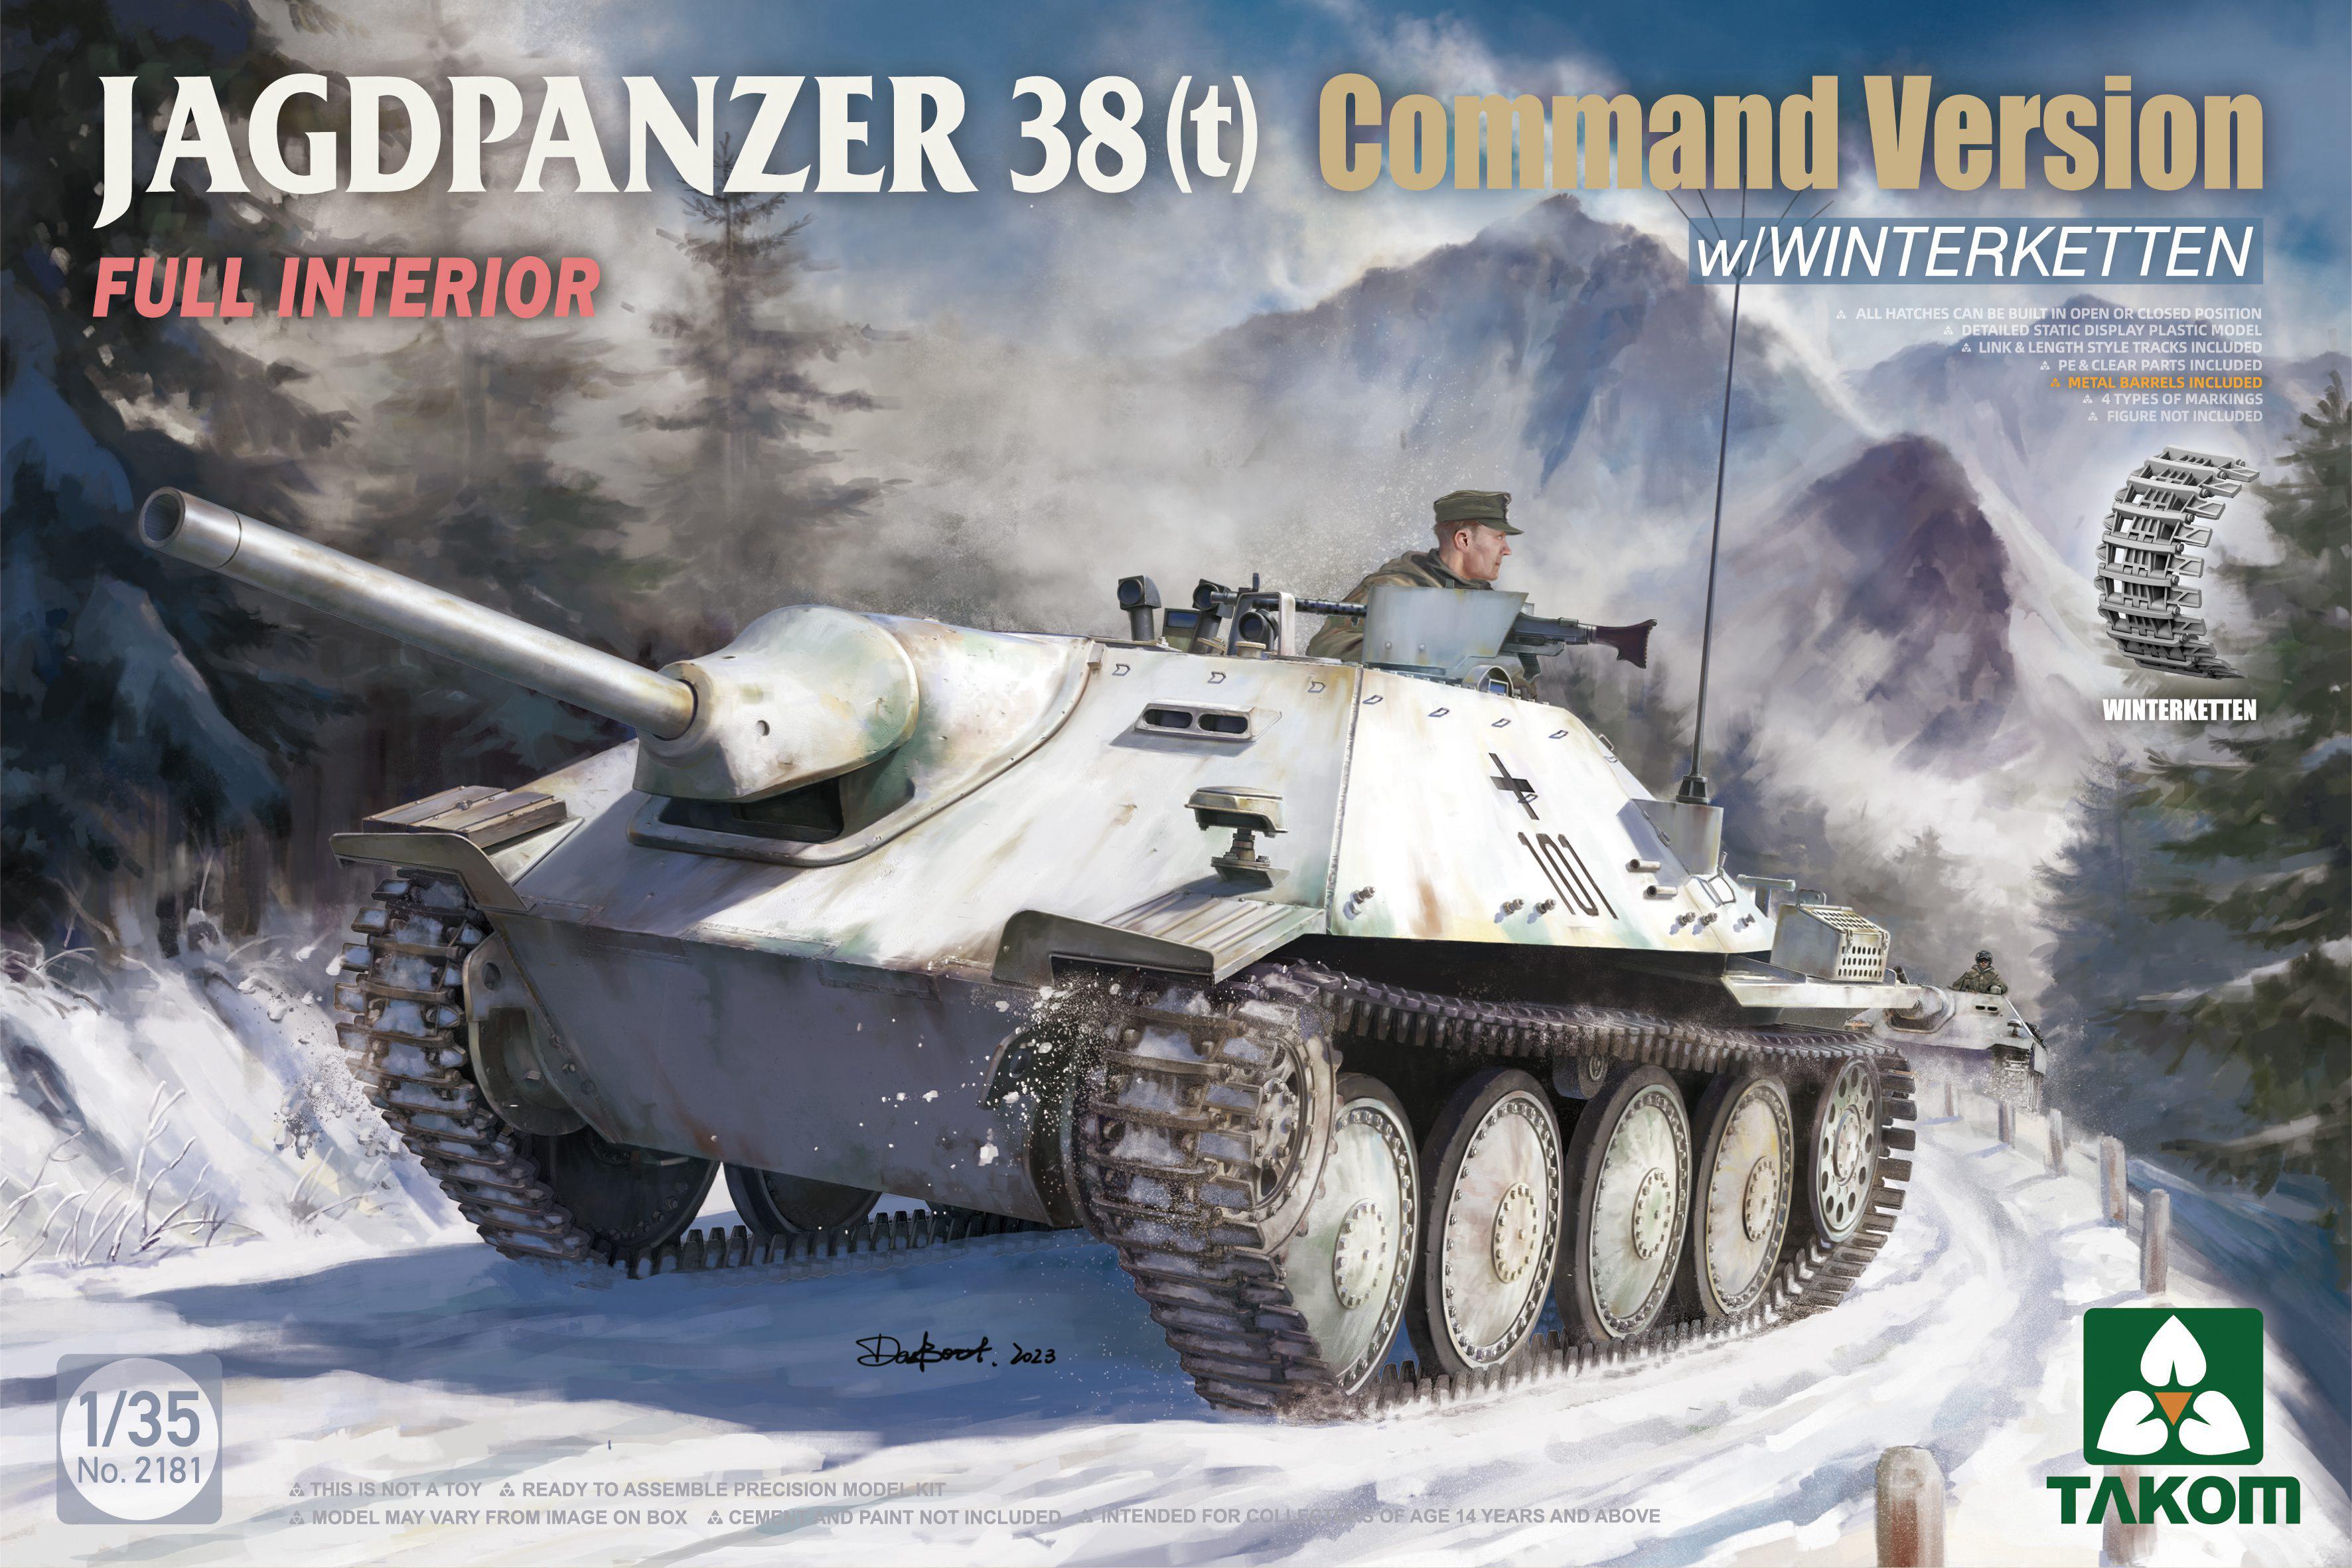 Jagdpanzer 38(t) Hetzer - Command Version - Full Interior - mit Winterketten